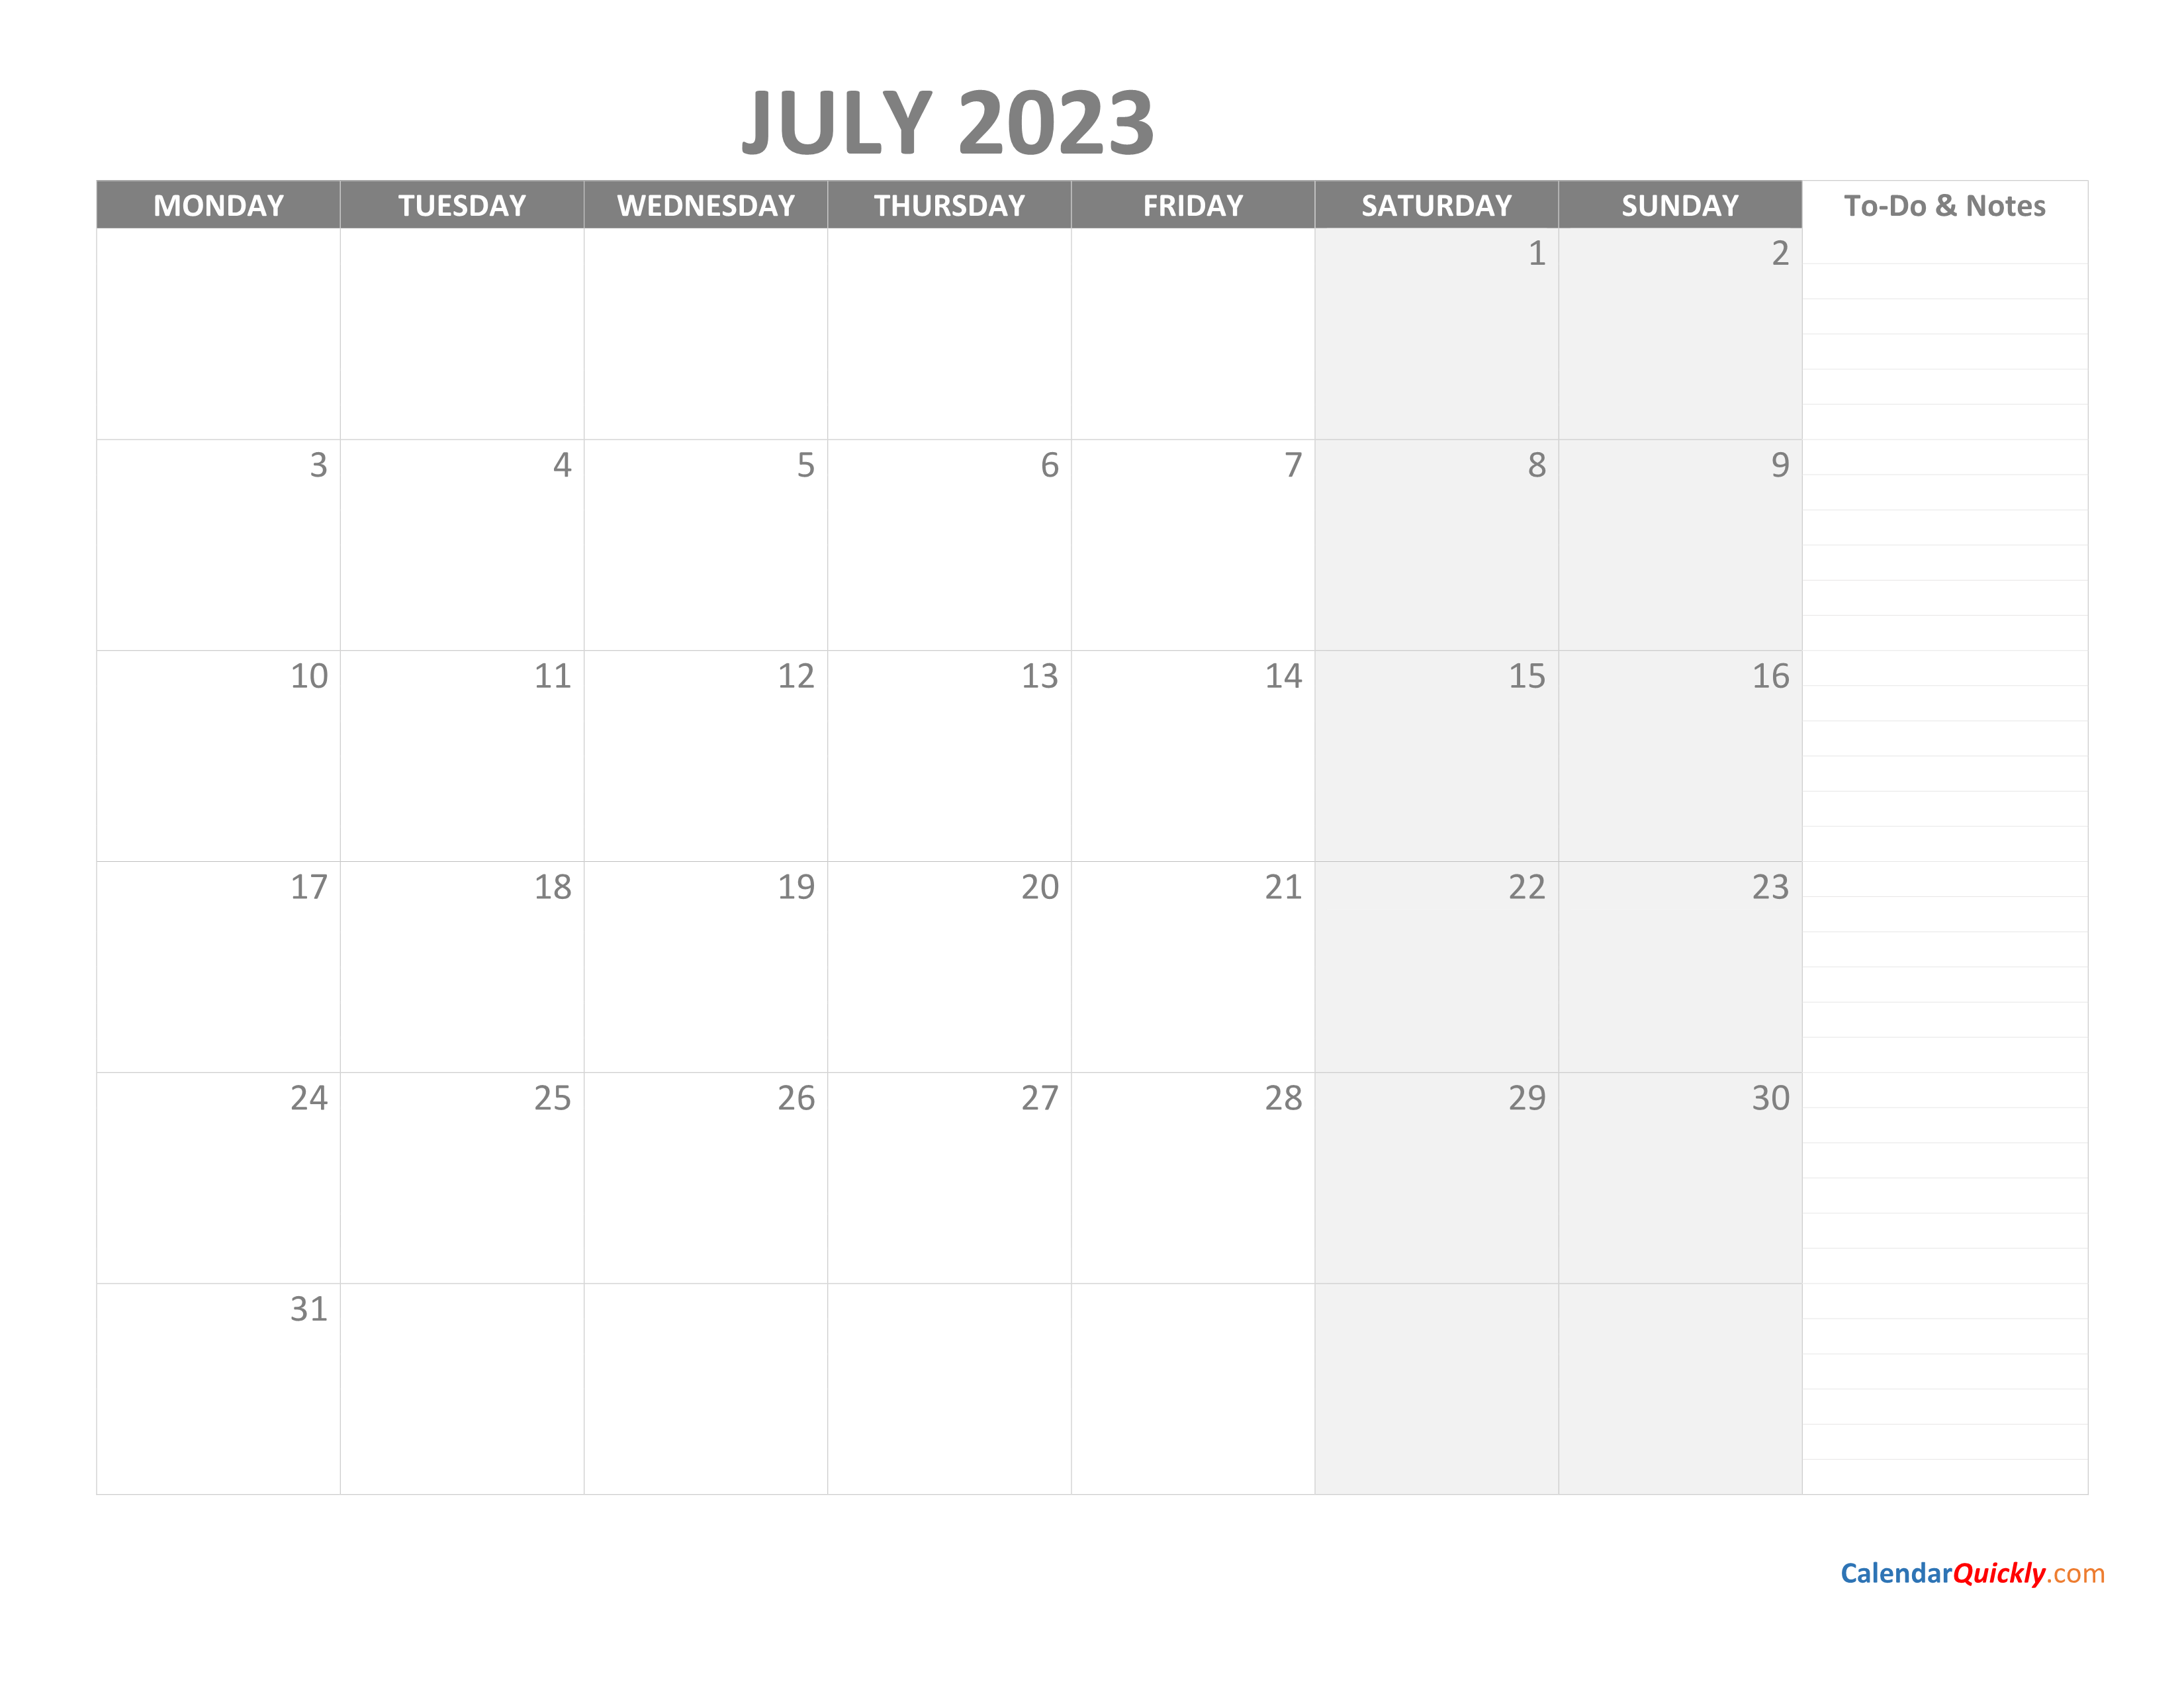 July Monday Calendar 2023 With Notes Calendar Quickly